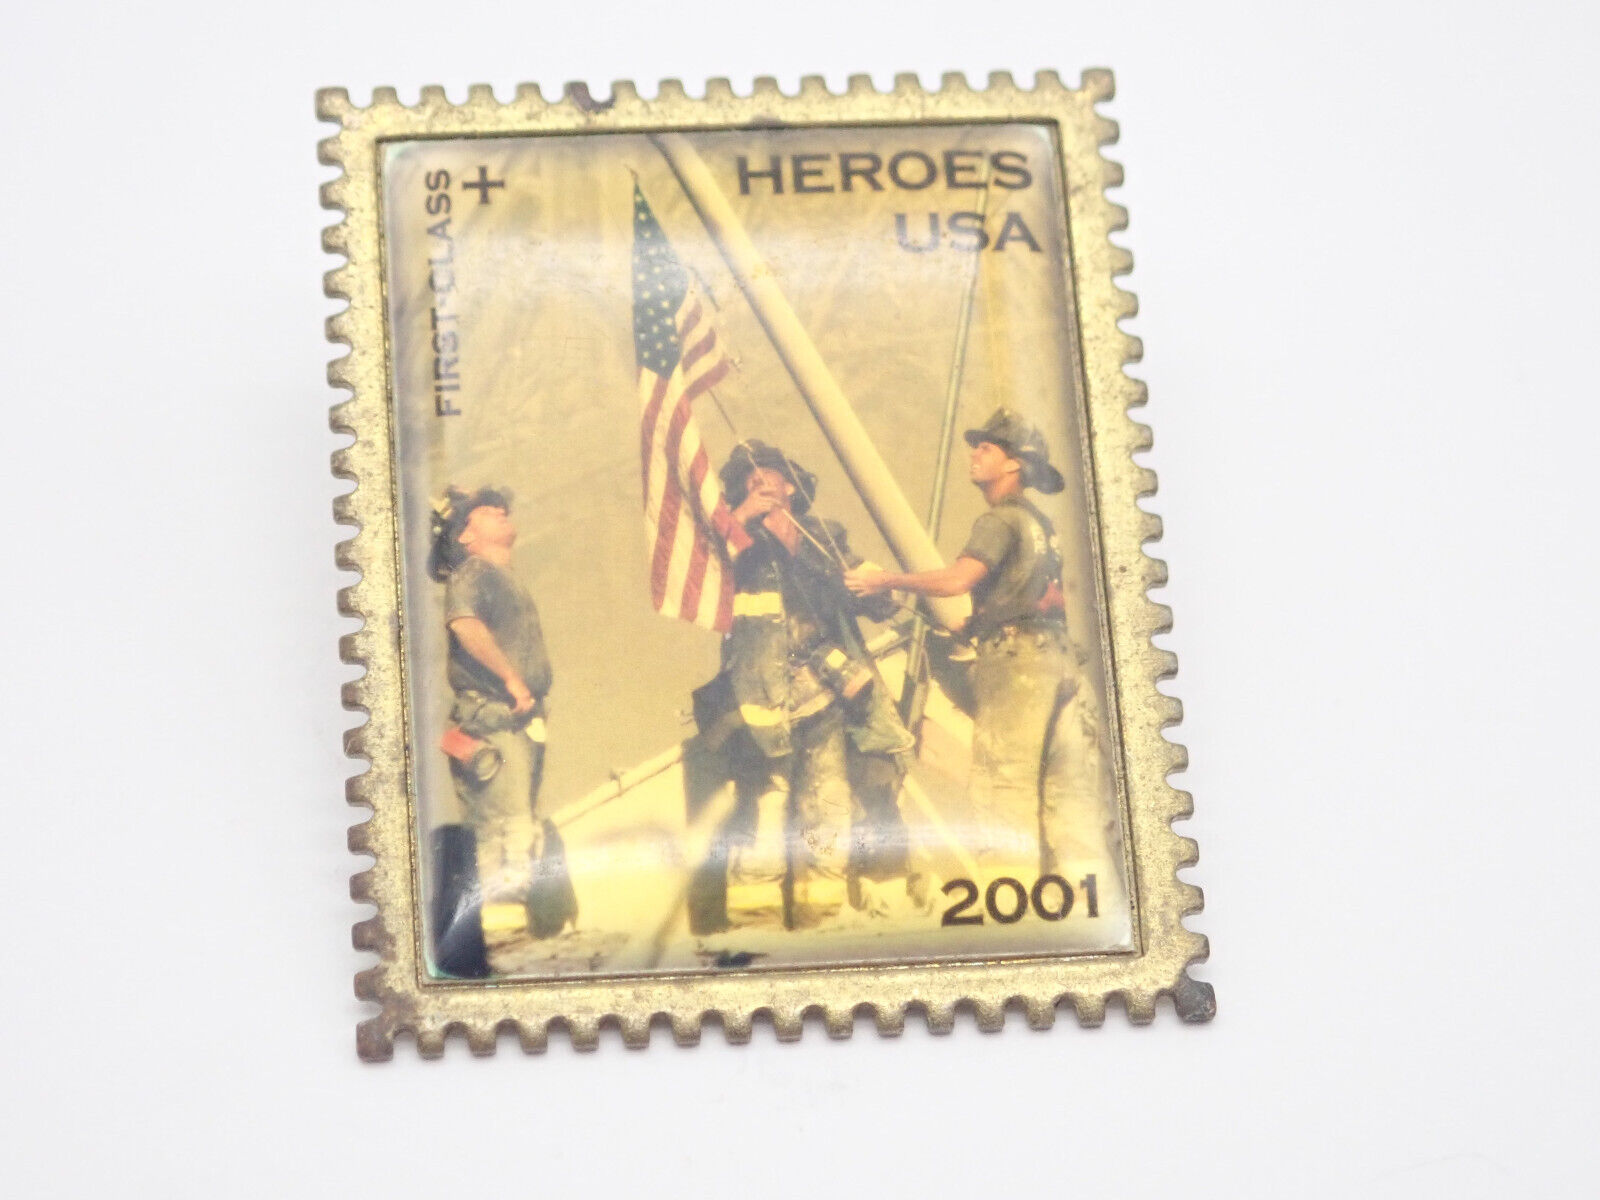 Heroes USA 9/11/2001 American Flag Postage Stamp Vintage Lapel Pin